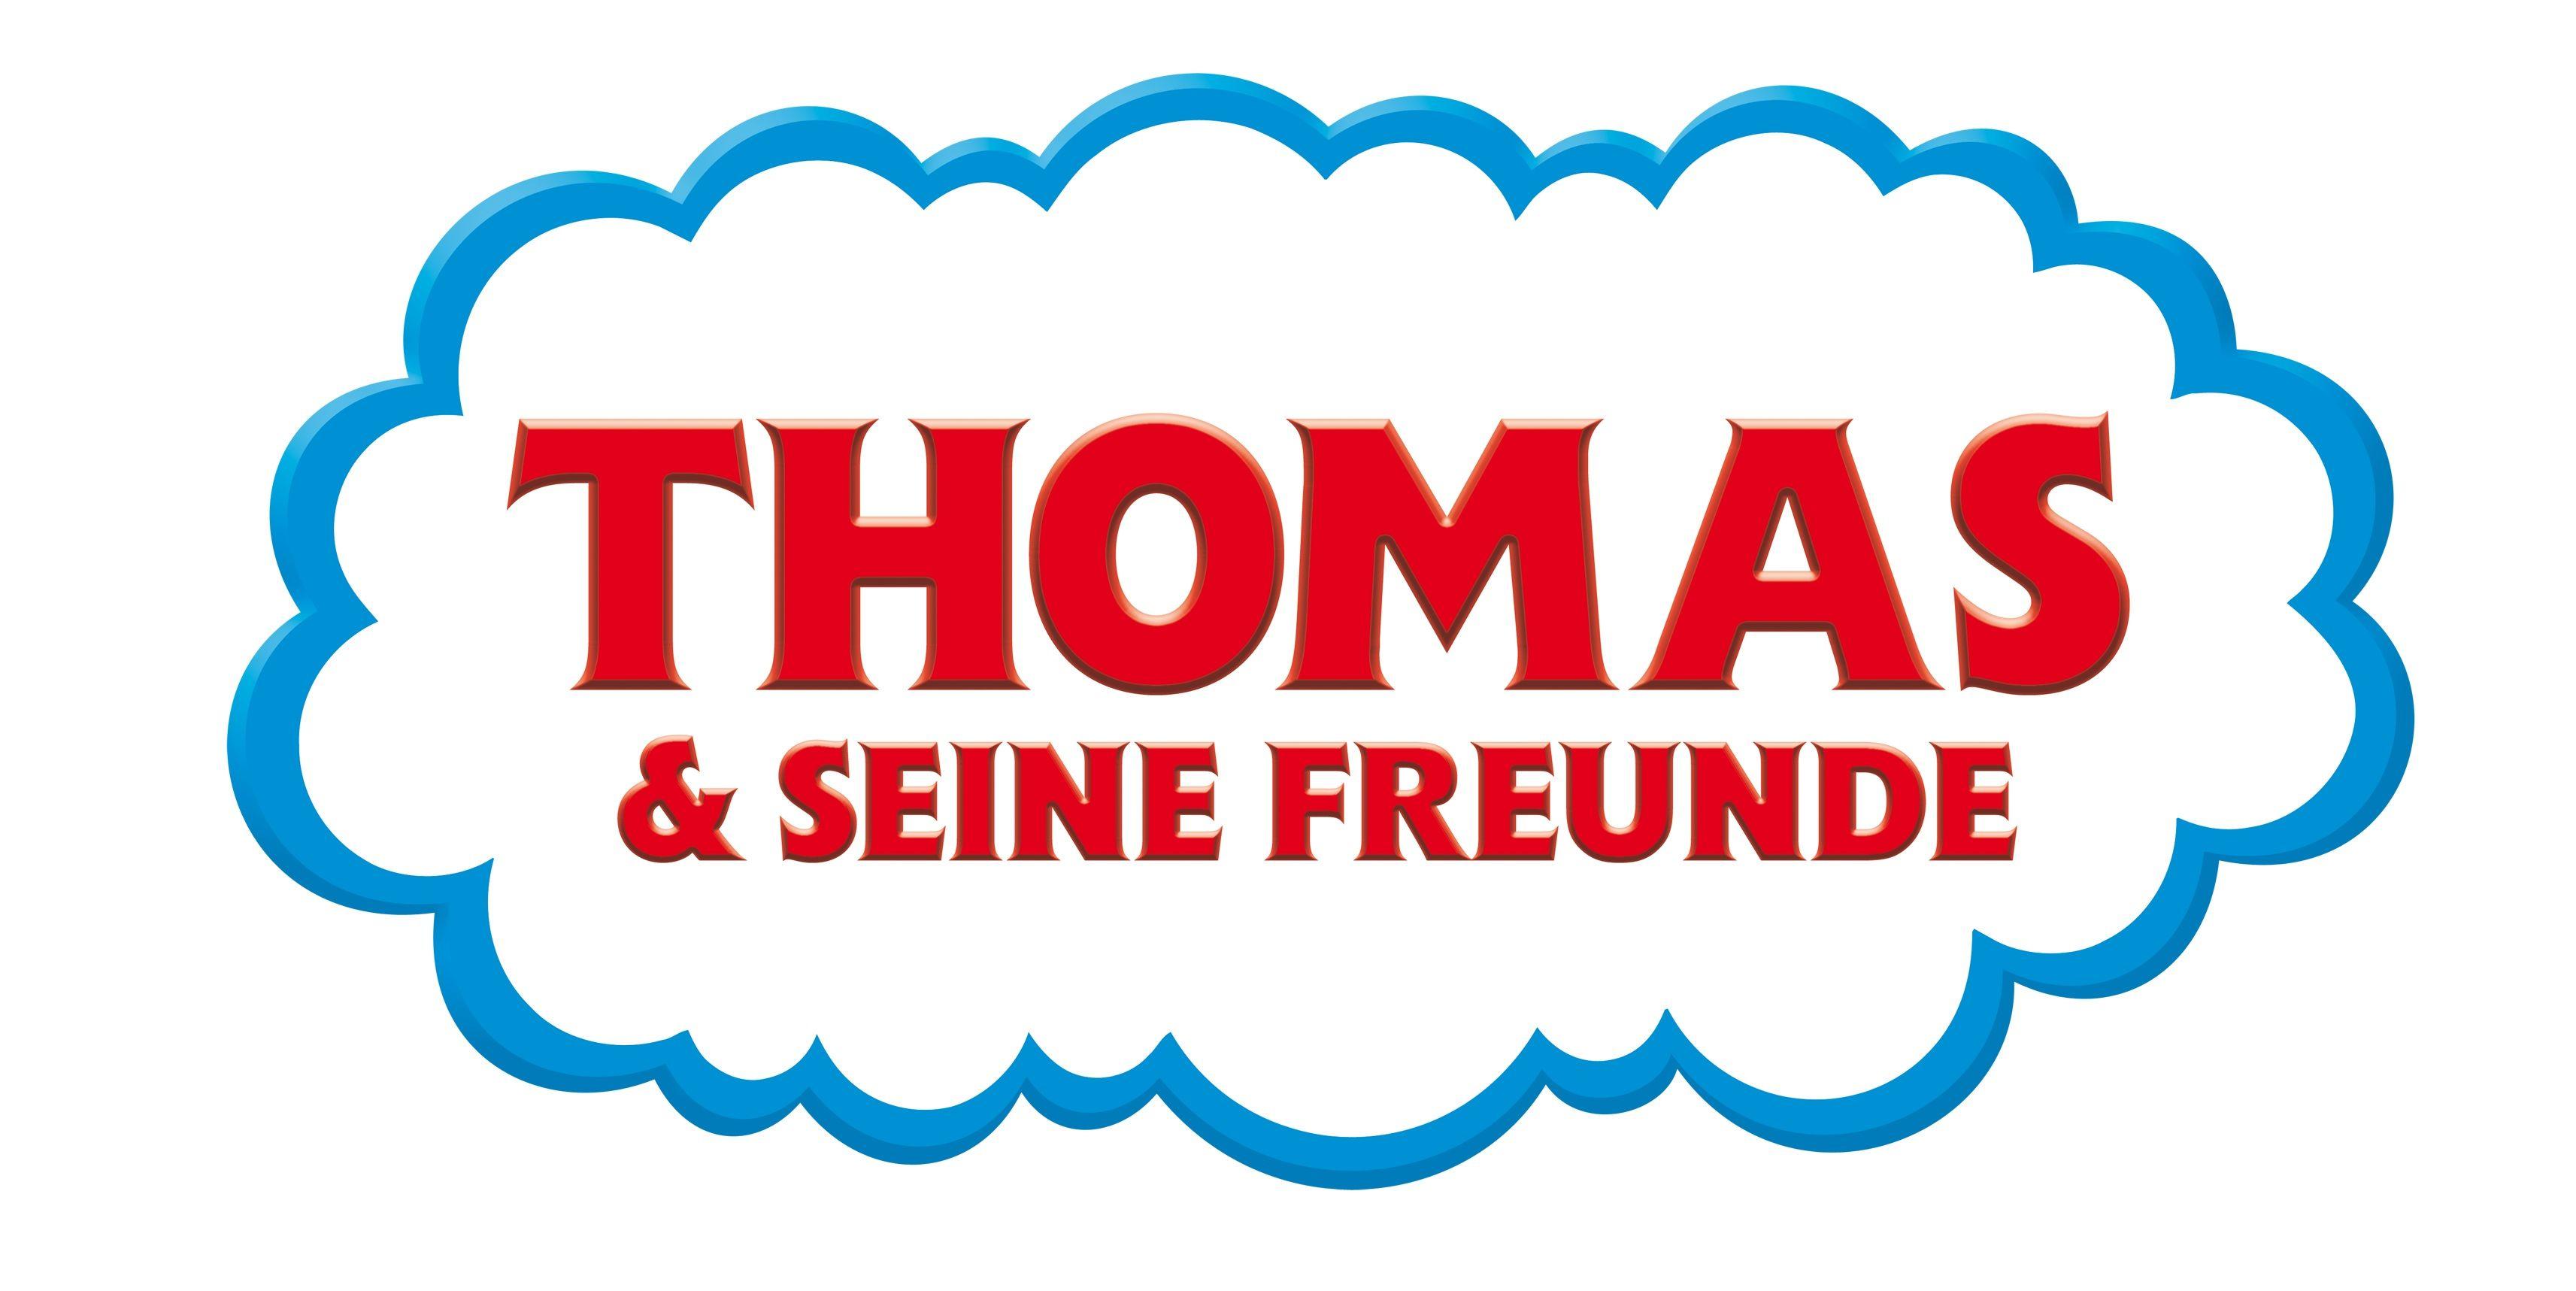 Thomas Logo - LogoDix